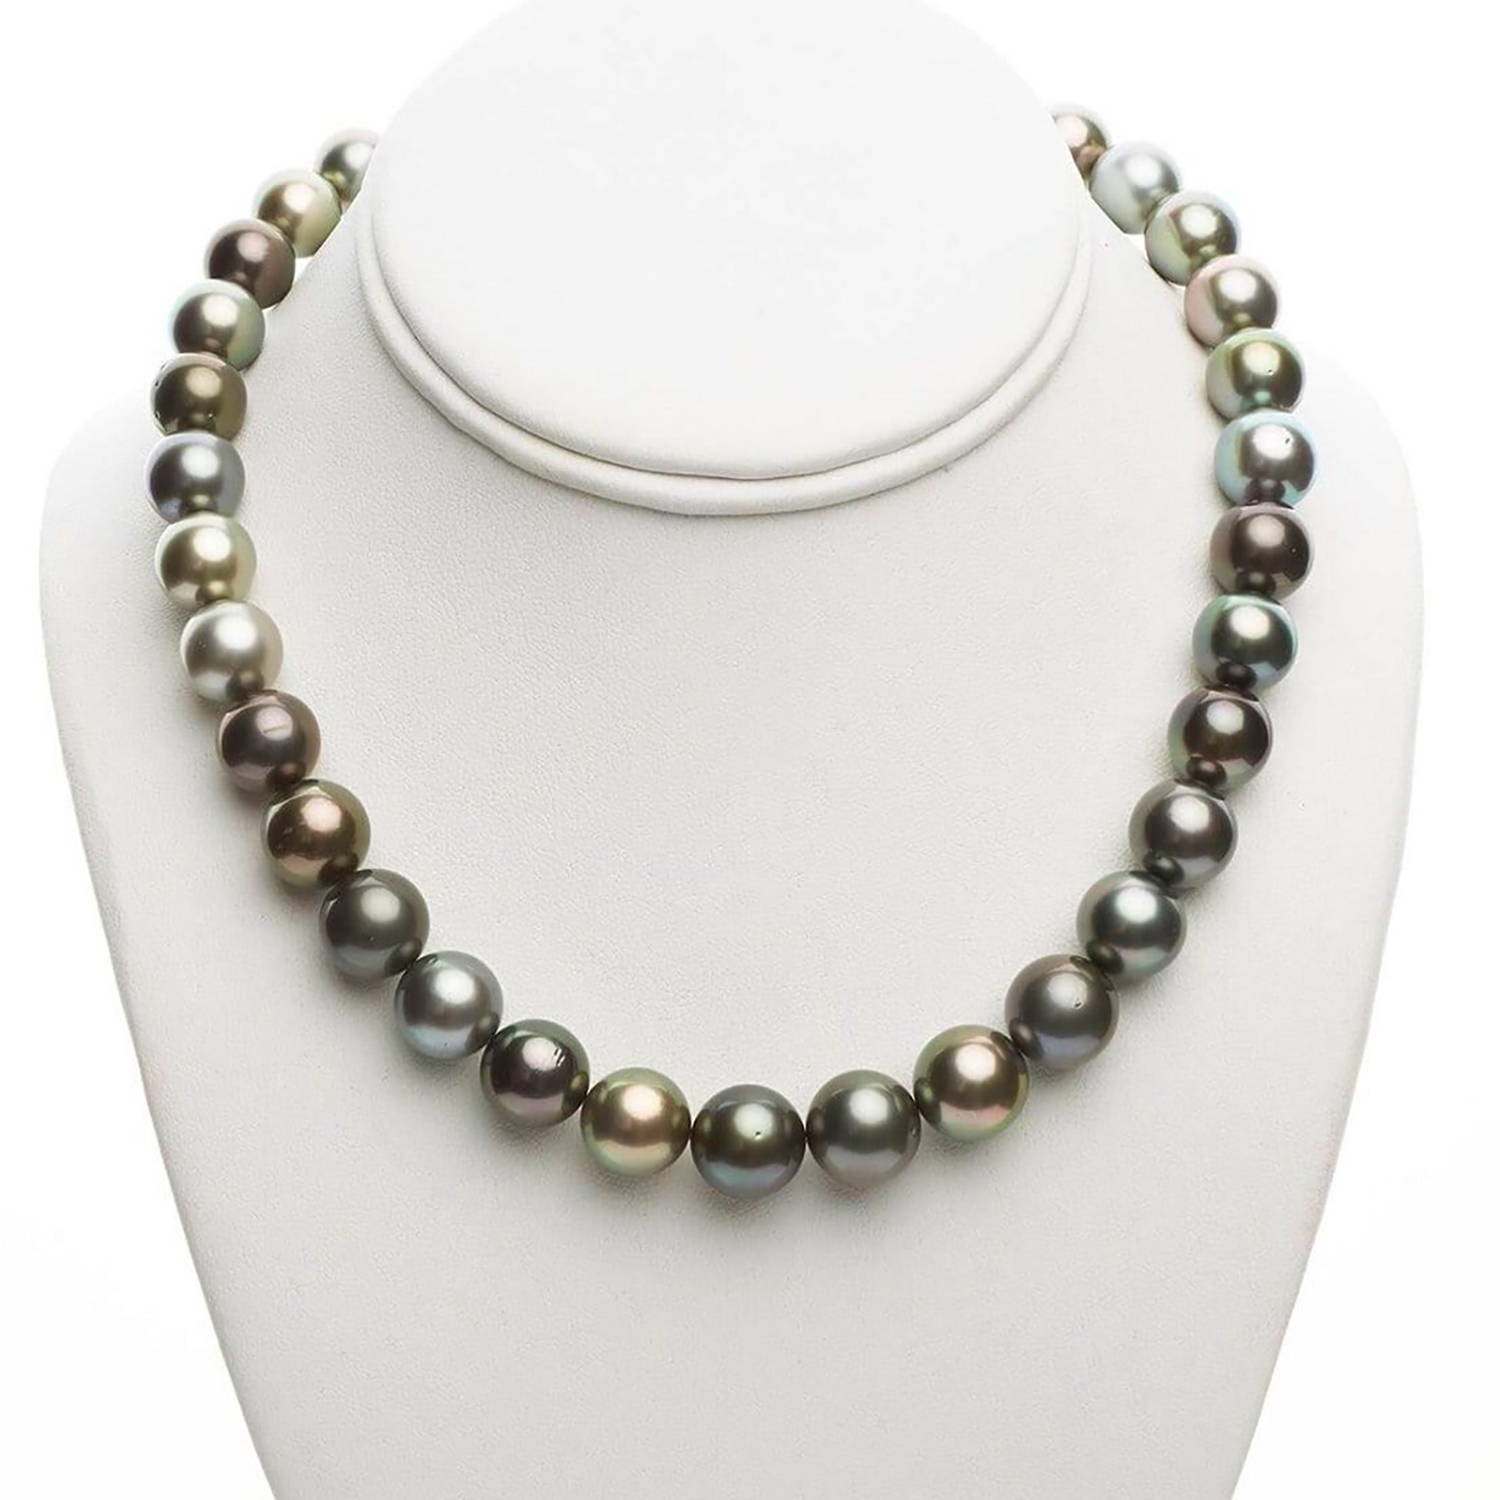 How To Buy Pearls - Pearls of Joy